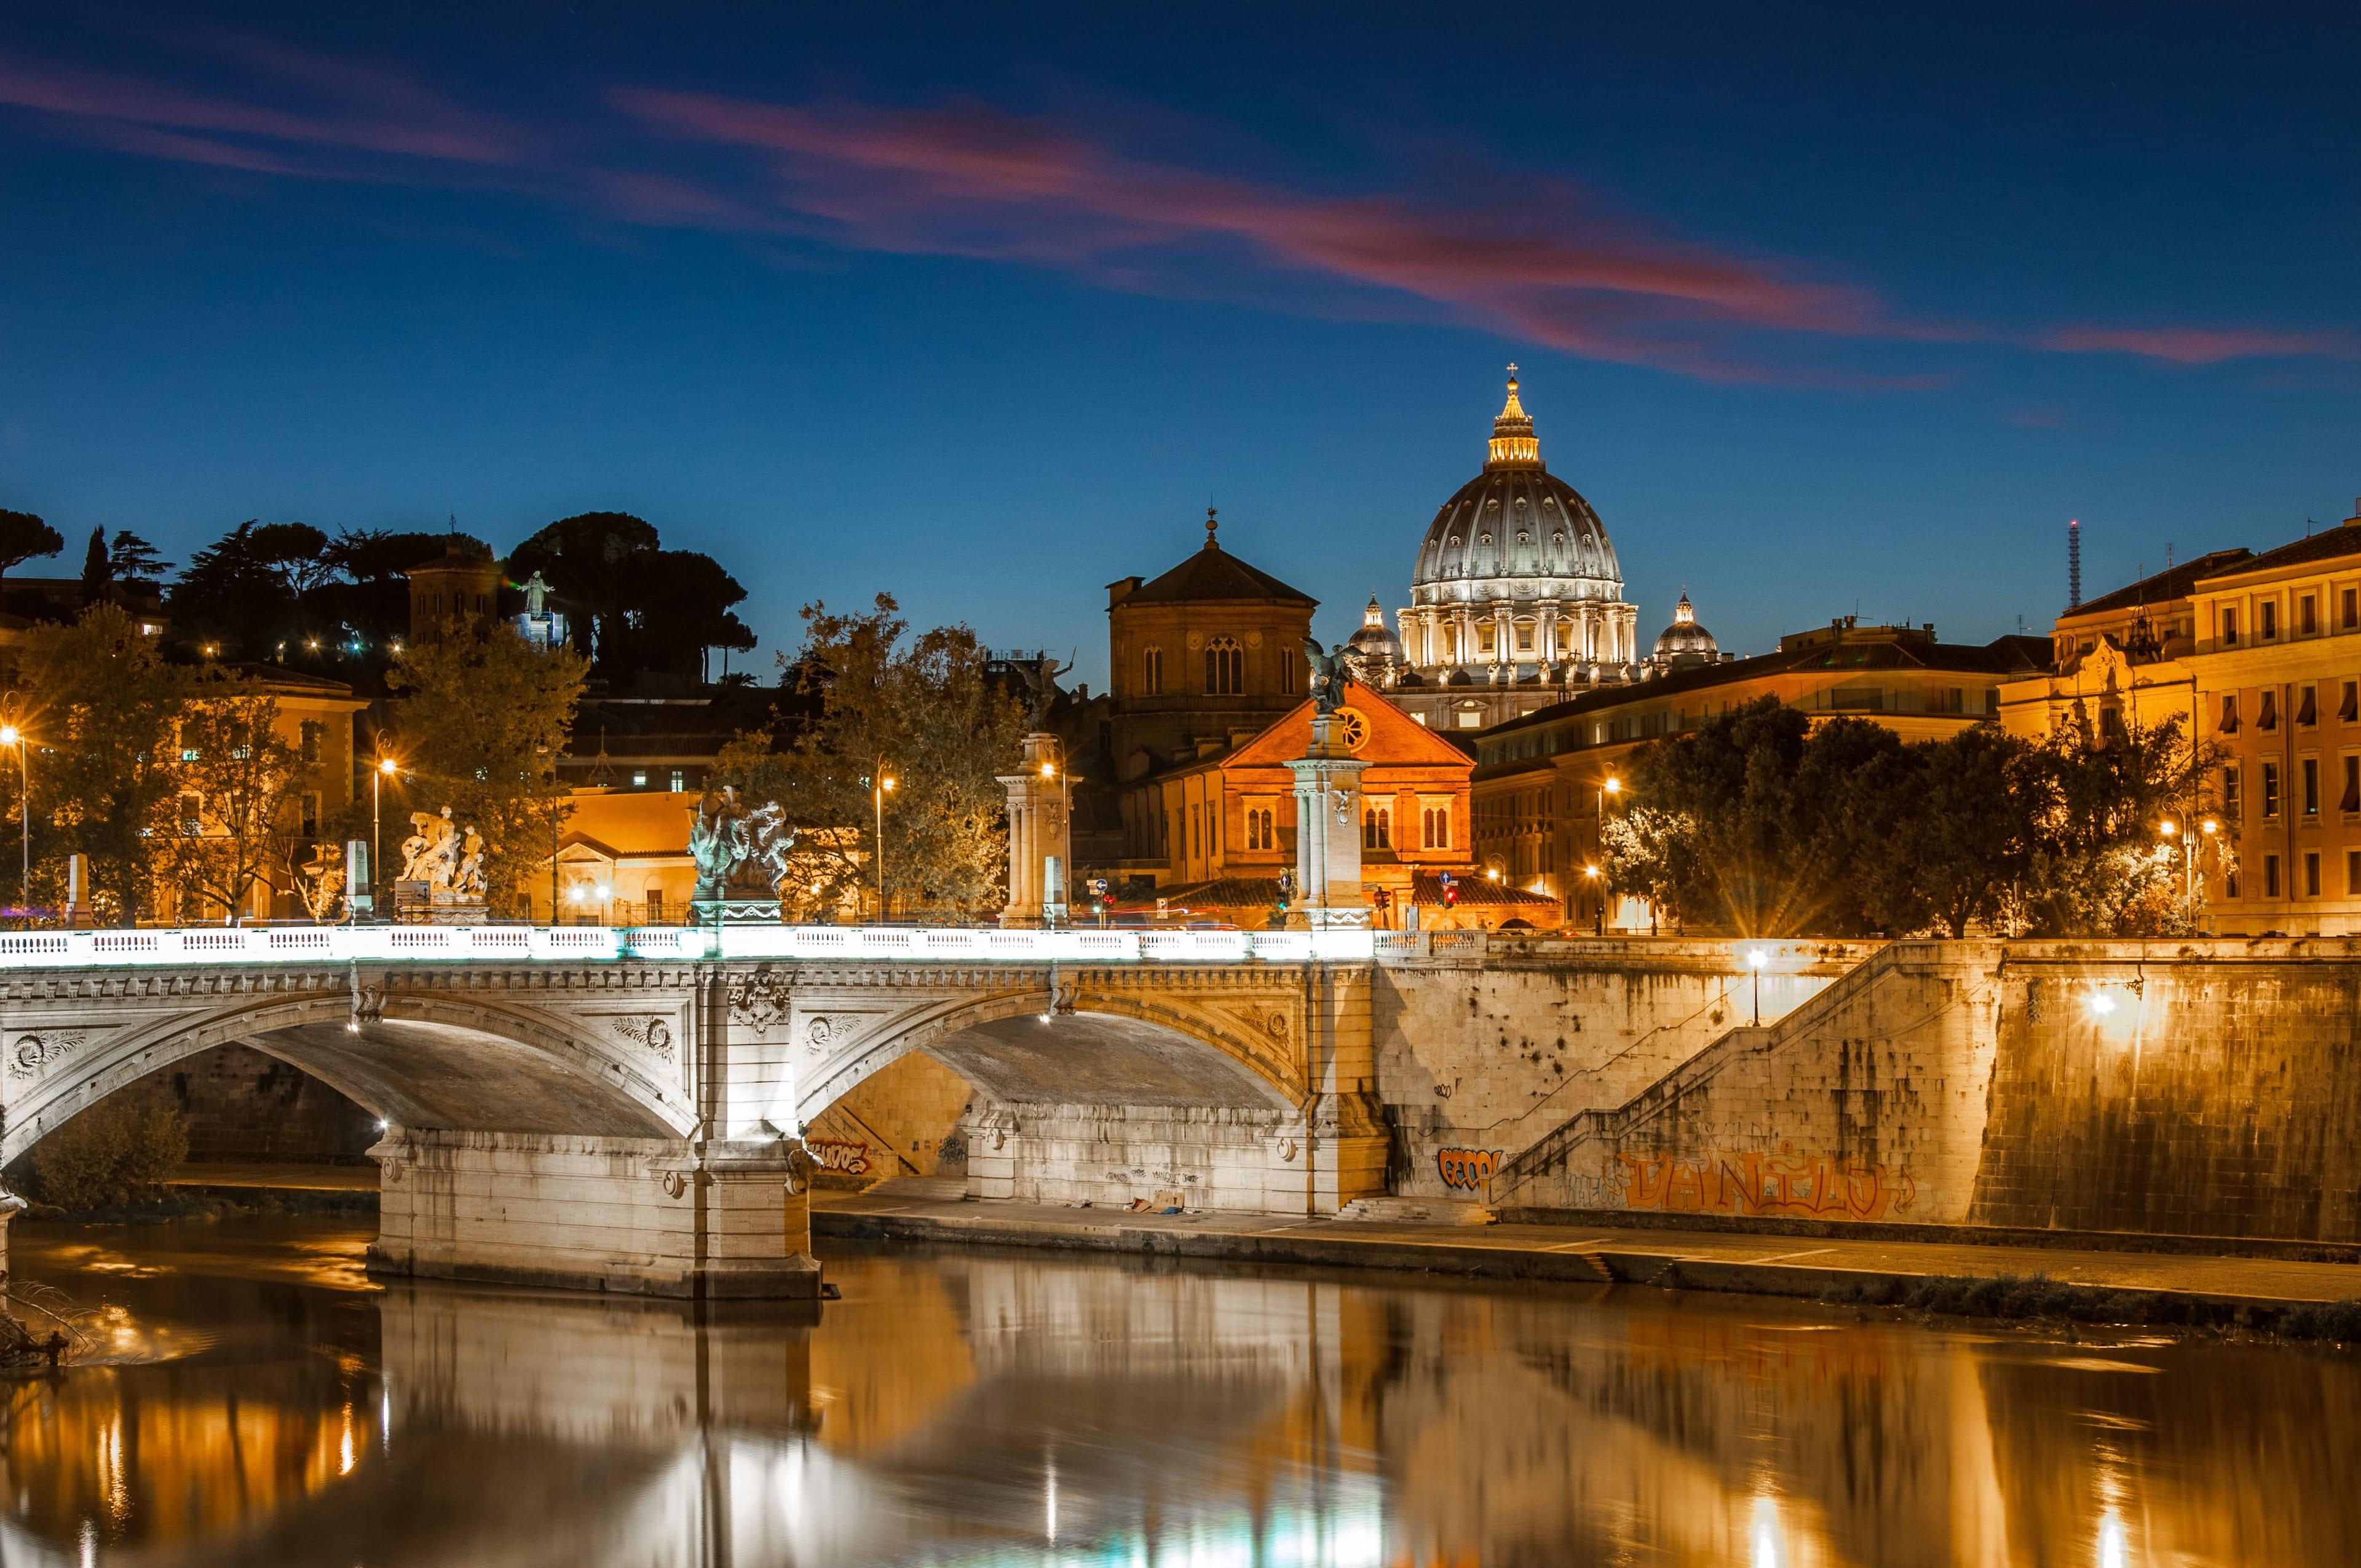 St. Peter's Basilica At Night